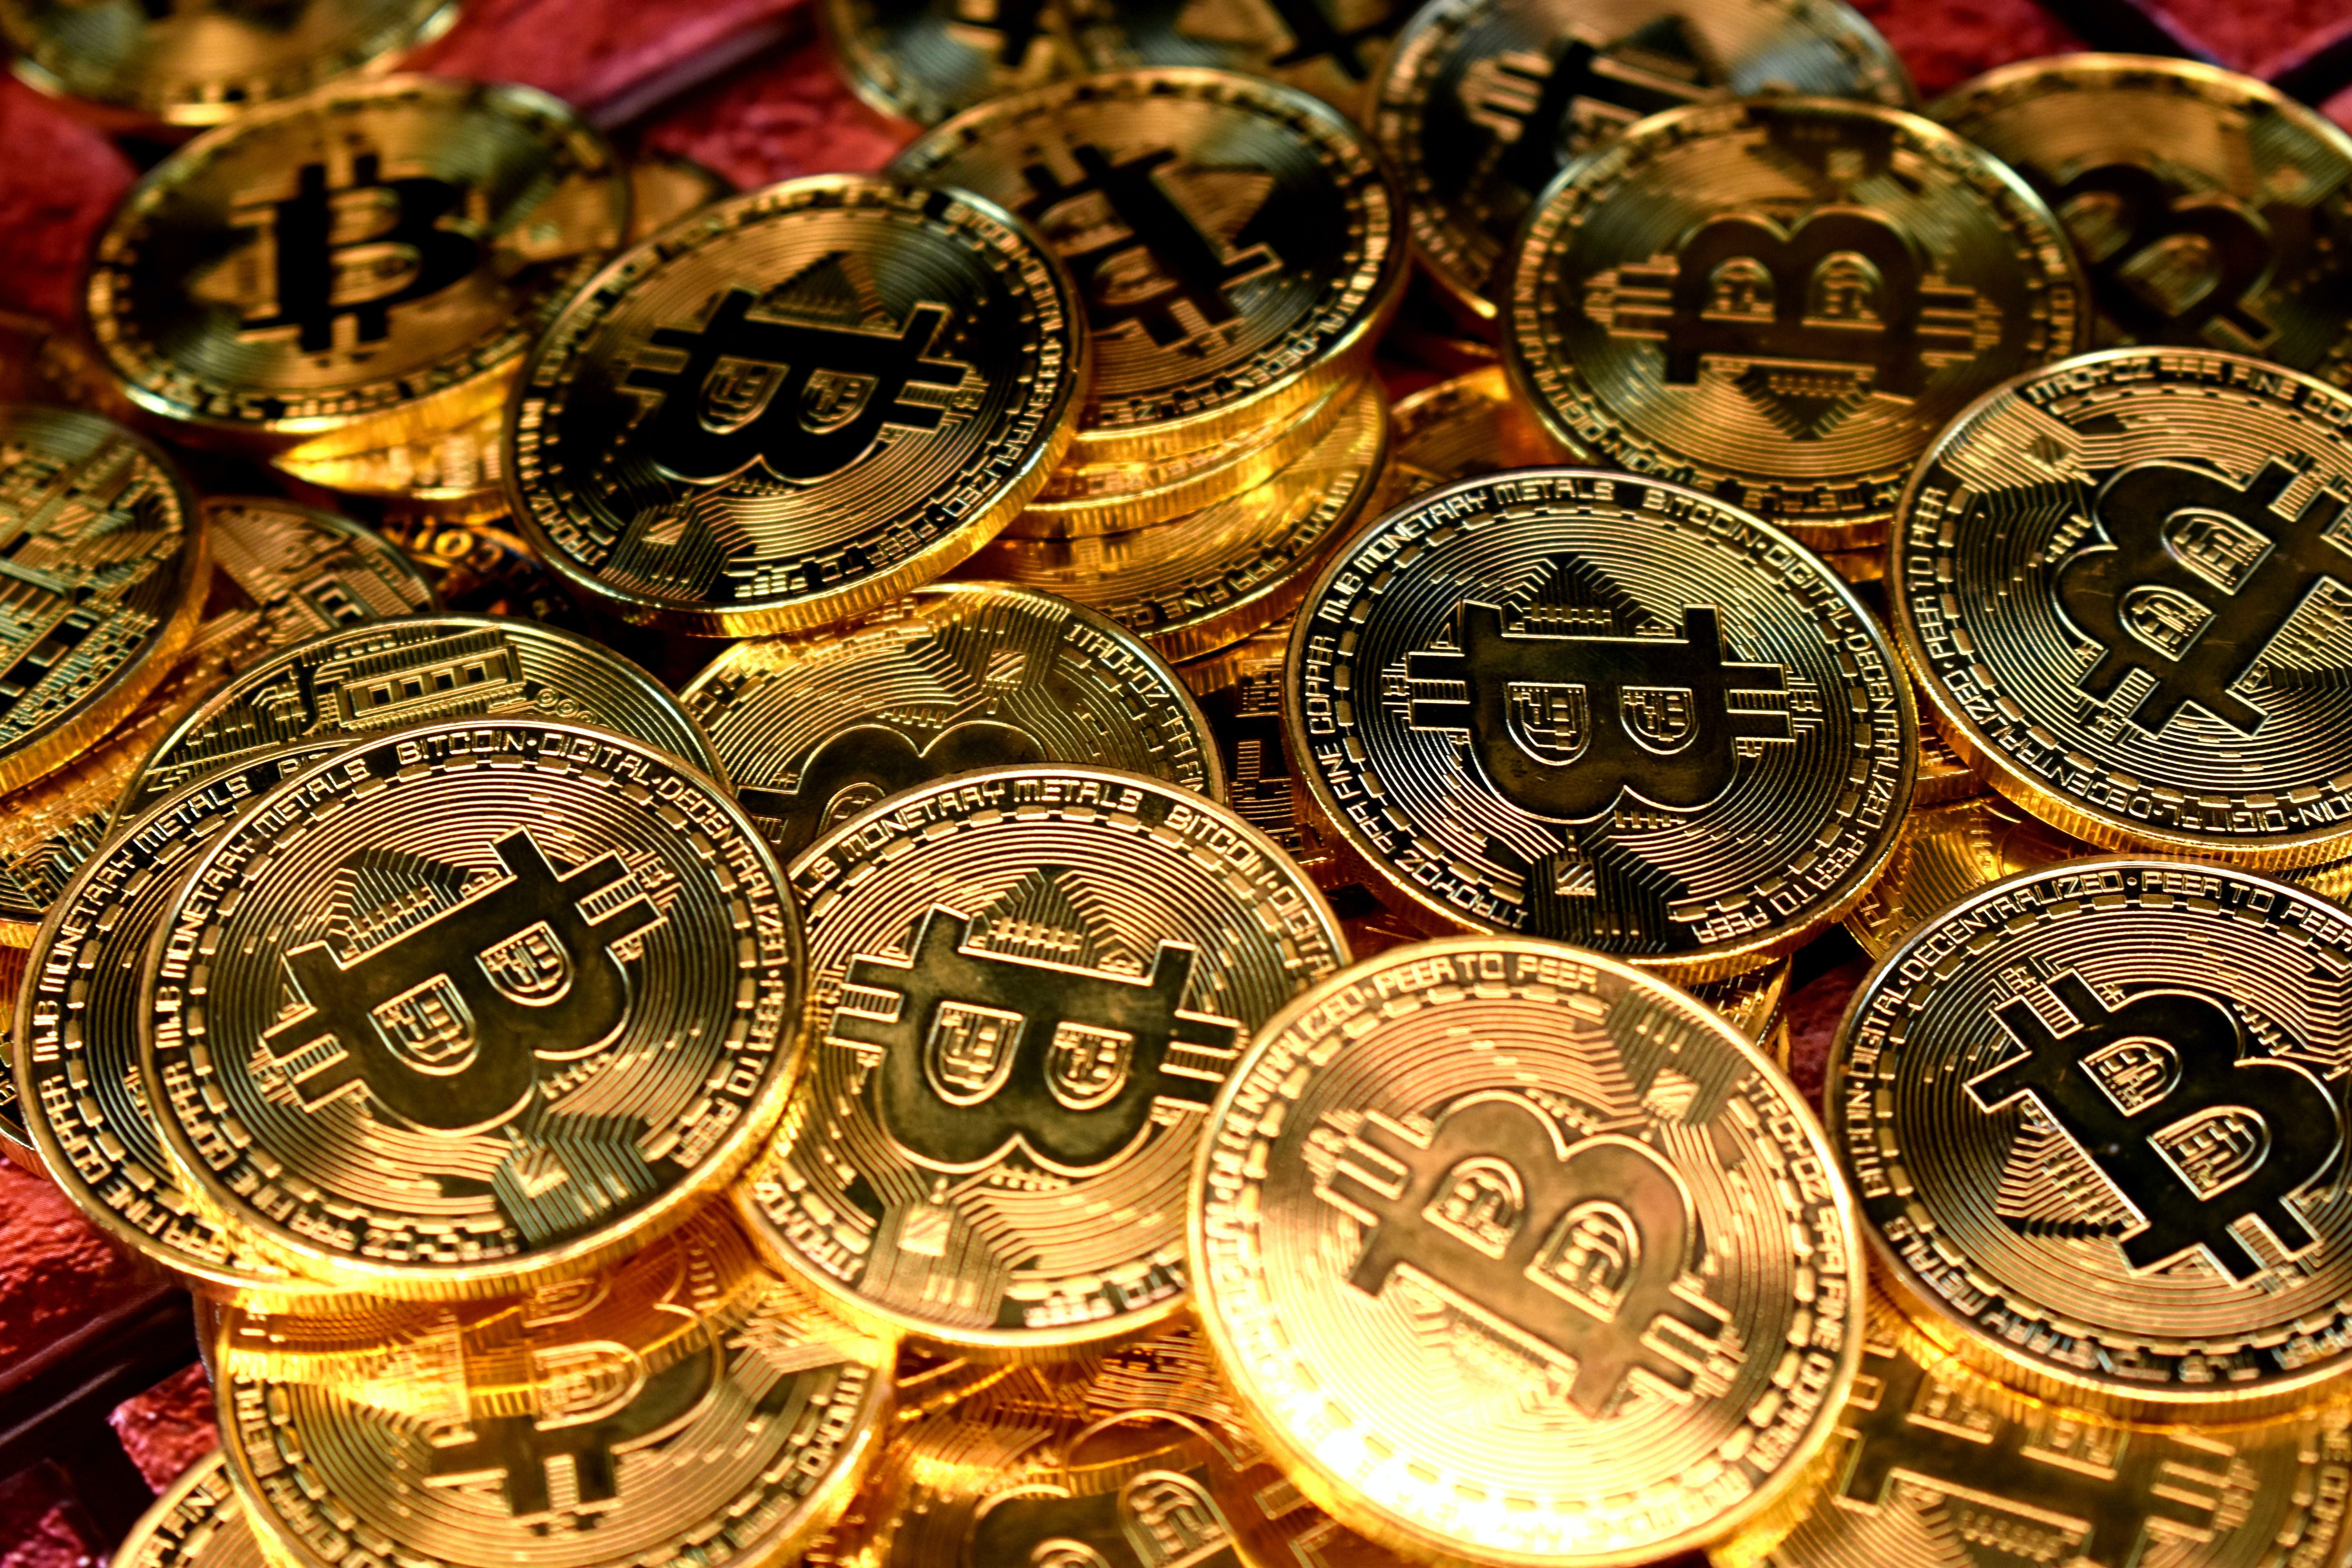 A pile of golden coins with the Bitcoin logo.